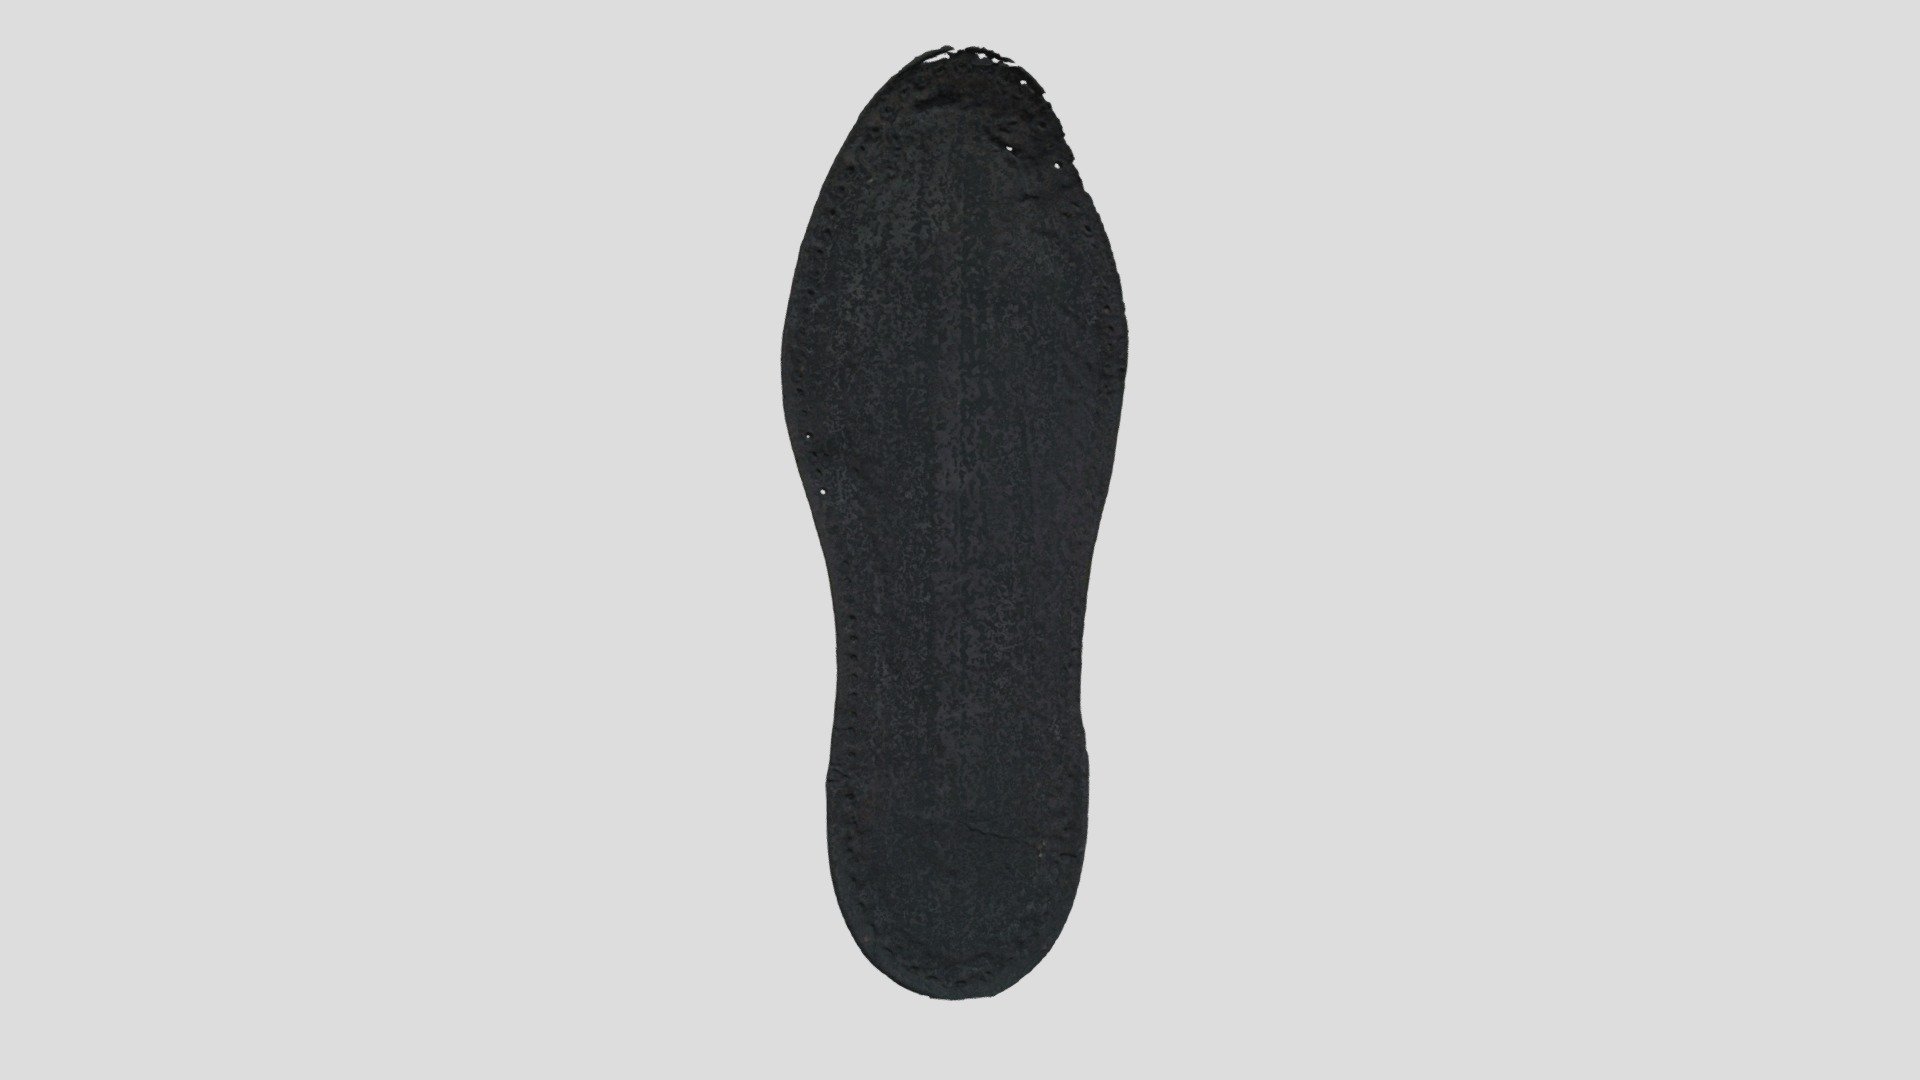 Eighteenth century shoe sole (VCU_3D_1452)